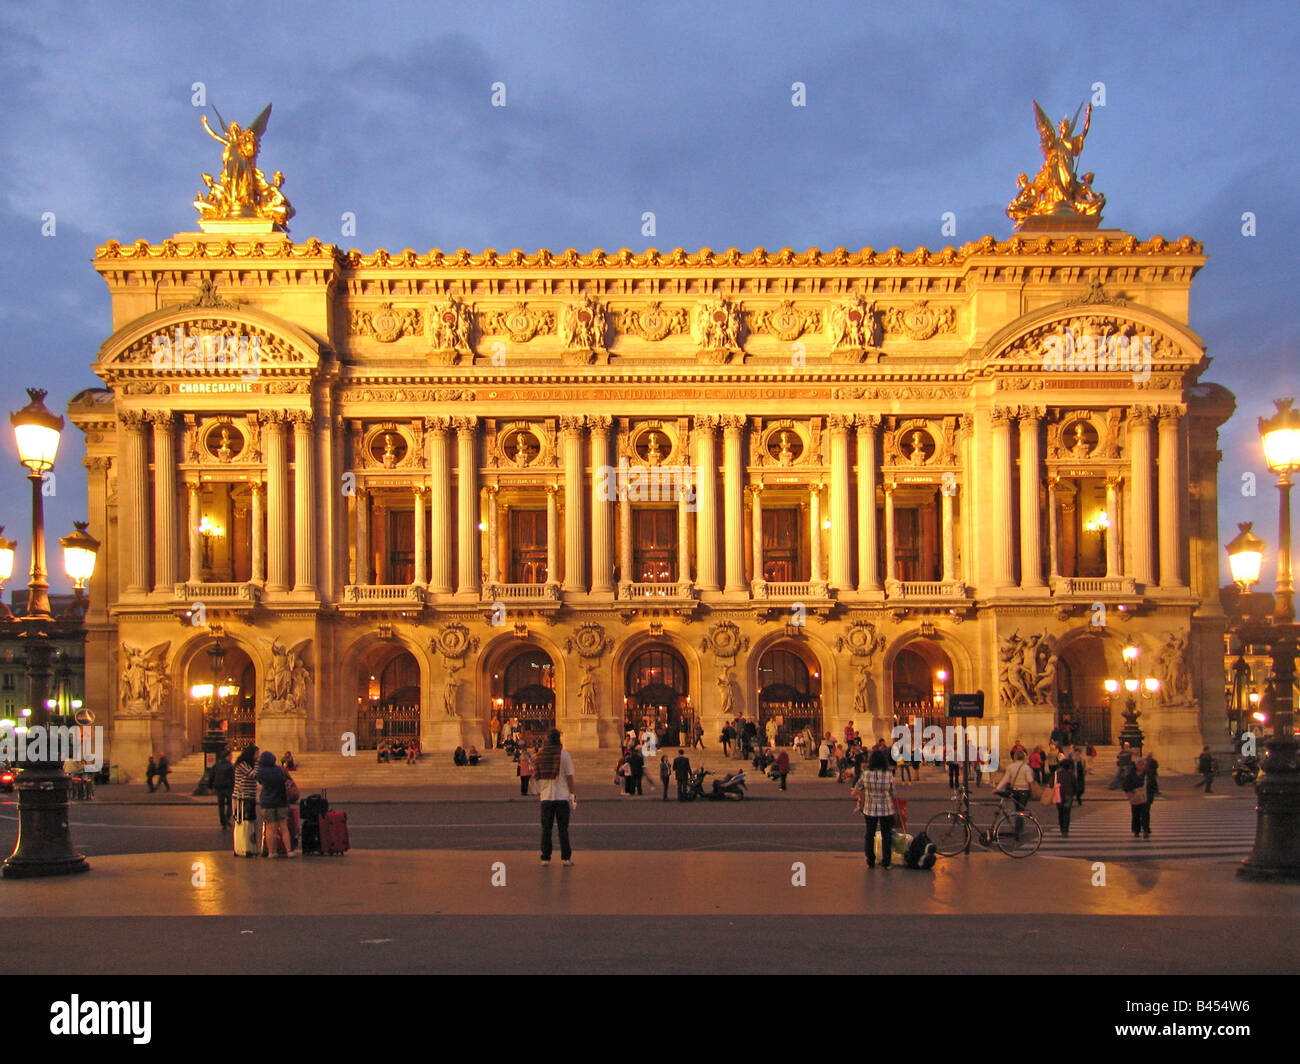 Paris Opera House or Academie National de Musique National Academy of Music Paris France Stock Photo